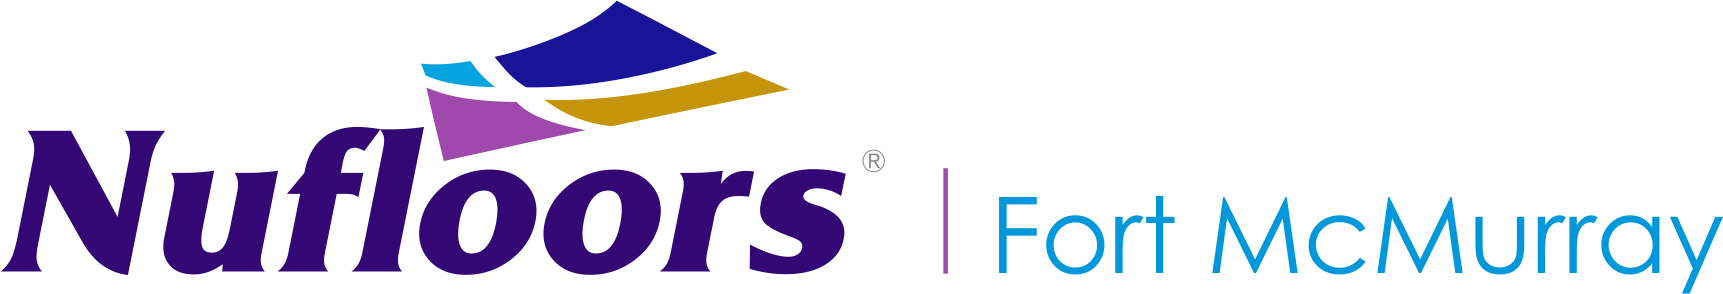 Nufloors Fort Mcmurray Secondary Logo